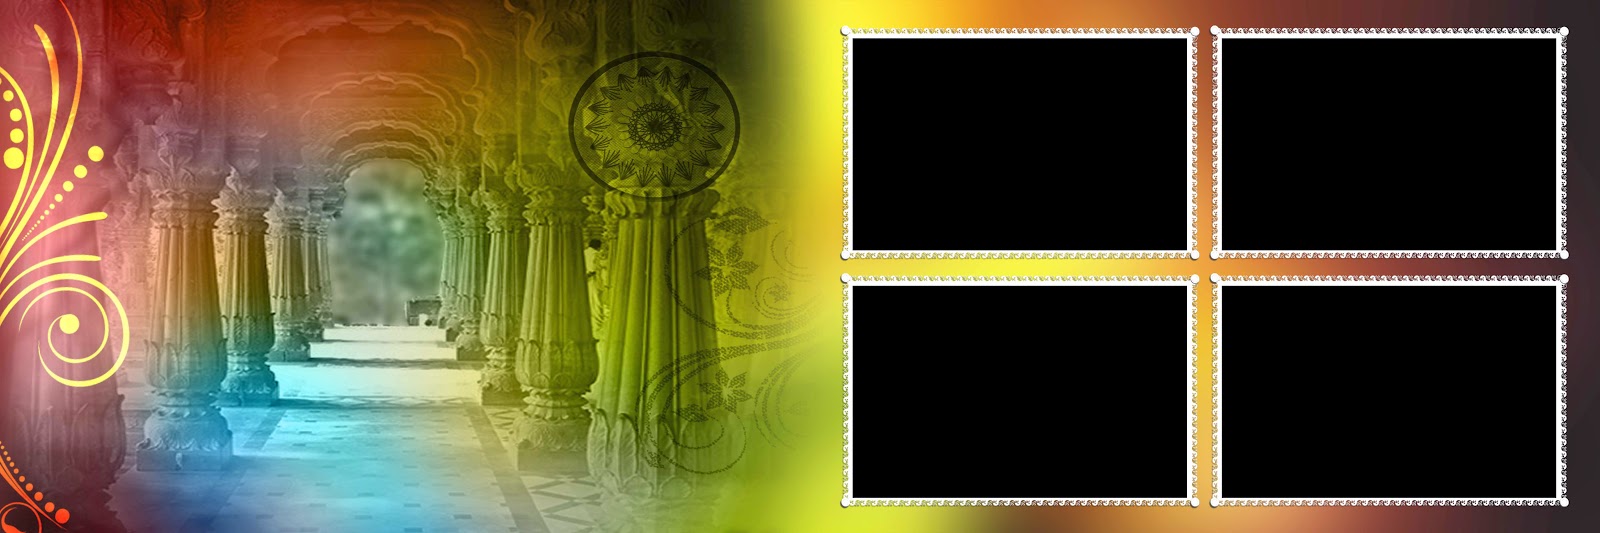 New 12x36 karishma album backgrounds and frames, photos